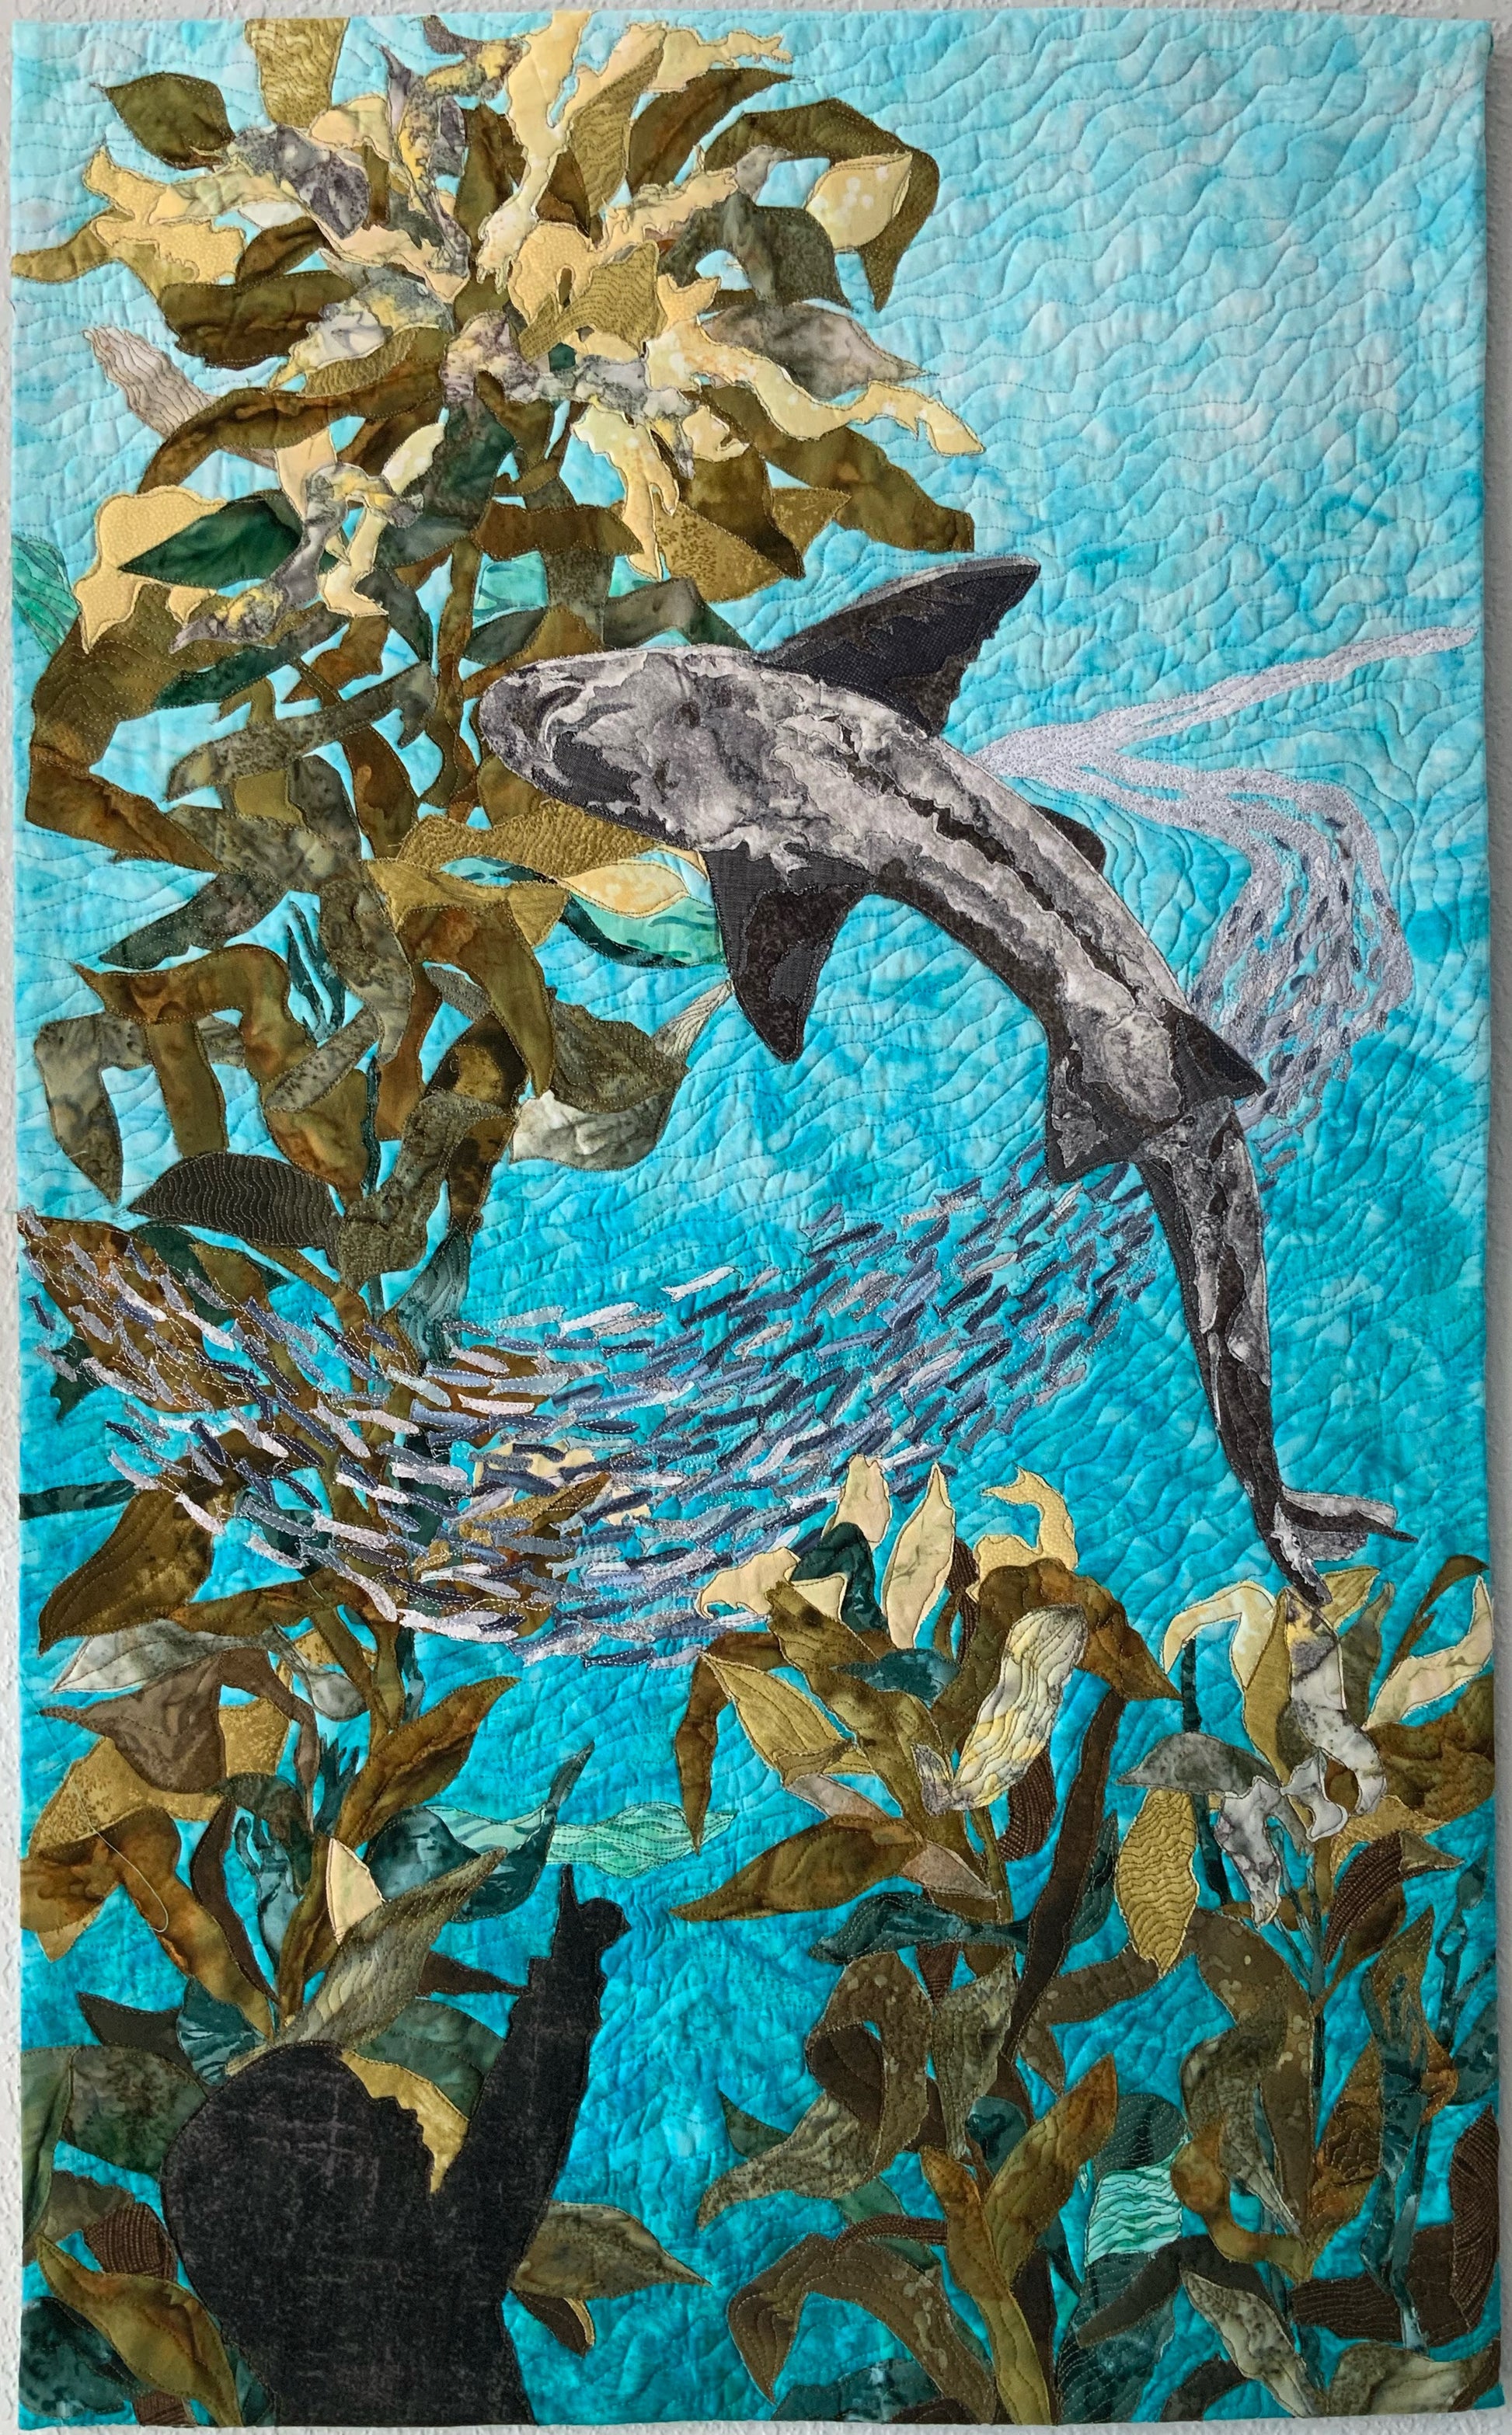 Monterey bay aquarium art, kelp forest art, kelp forest shark artwork, ocean artwork, fabric collage artwork, fabric collage shark, Monterey bay sewn art